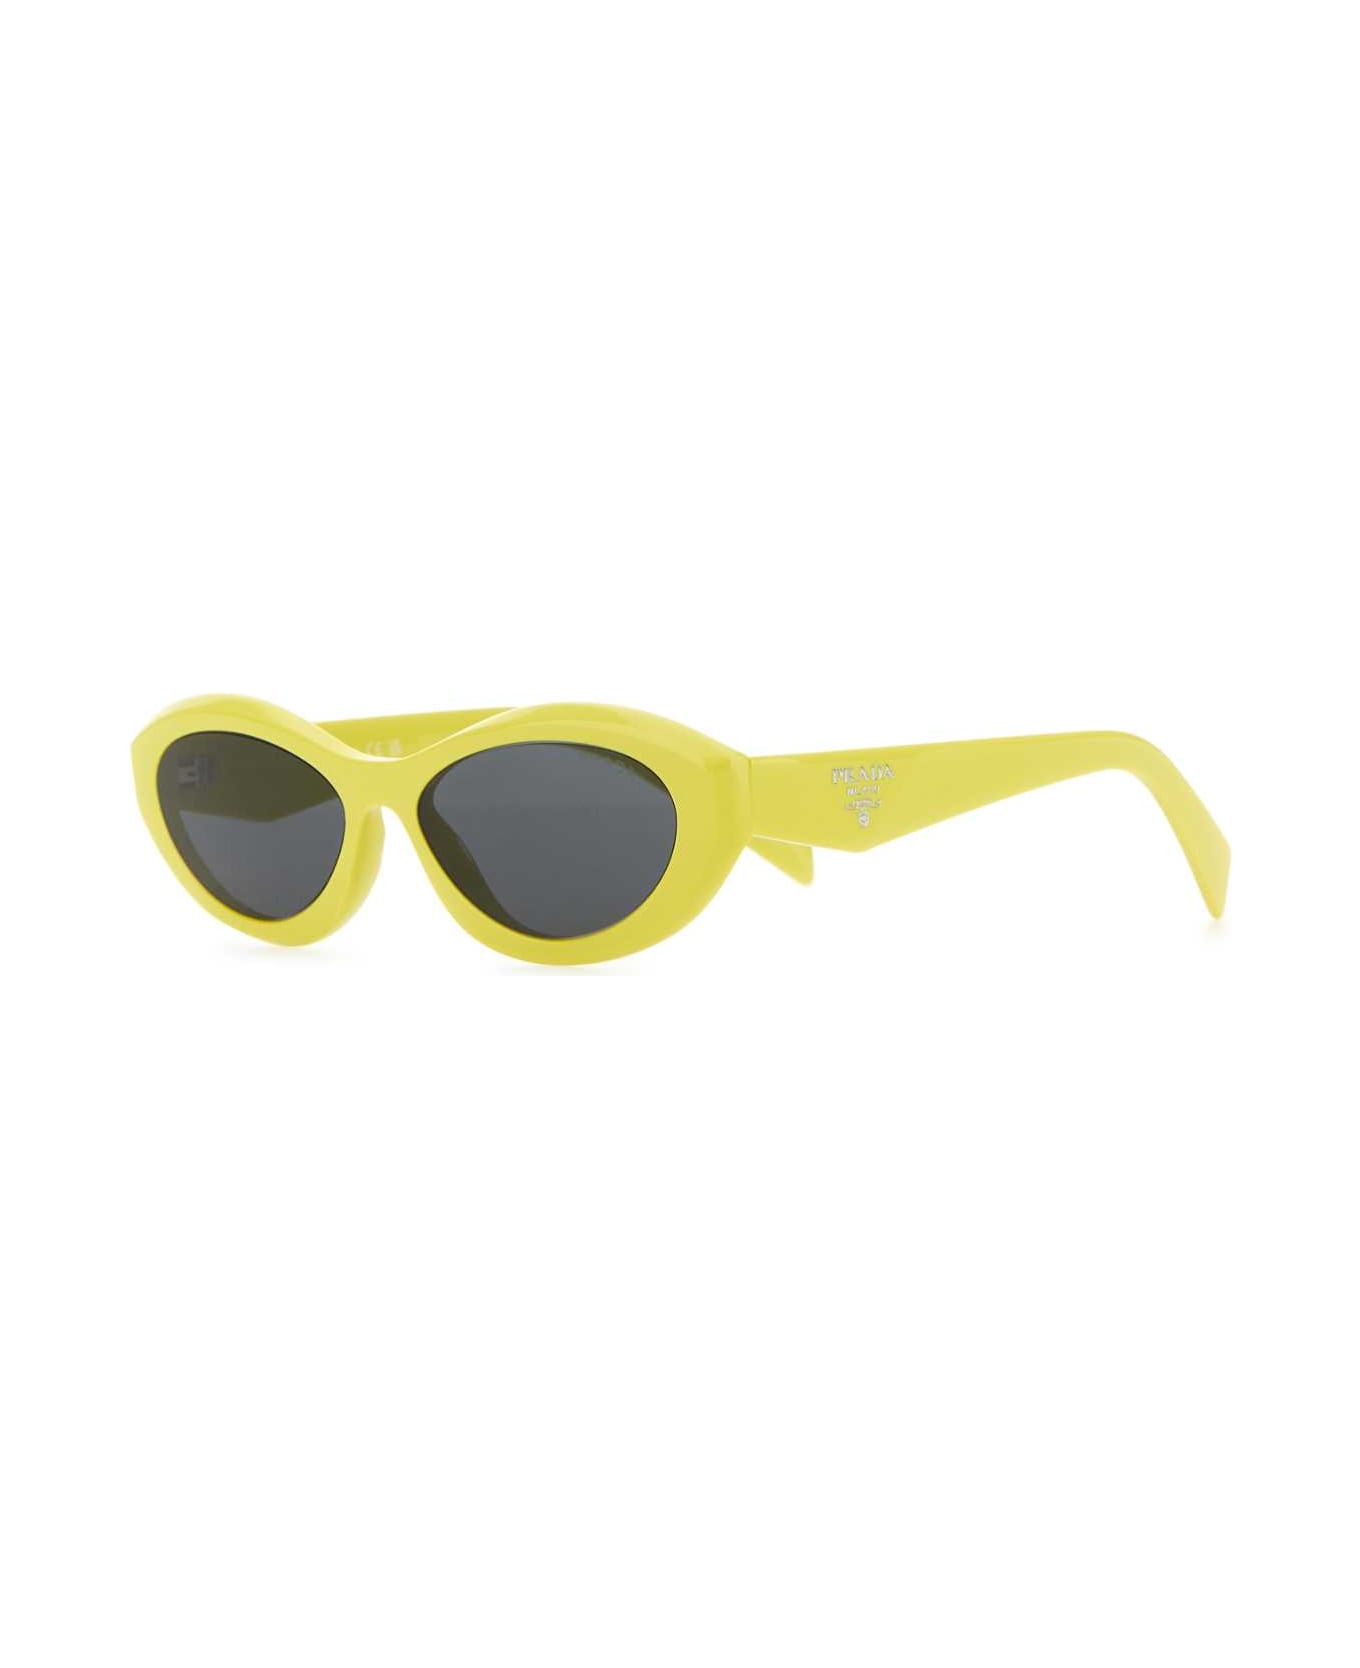 Prada Yellow Acetate Sunglasses - LENSESARDESIA サングラス